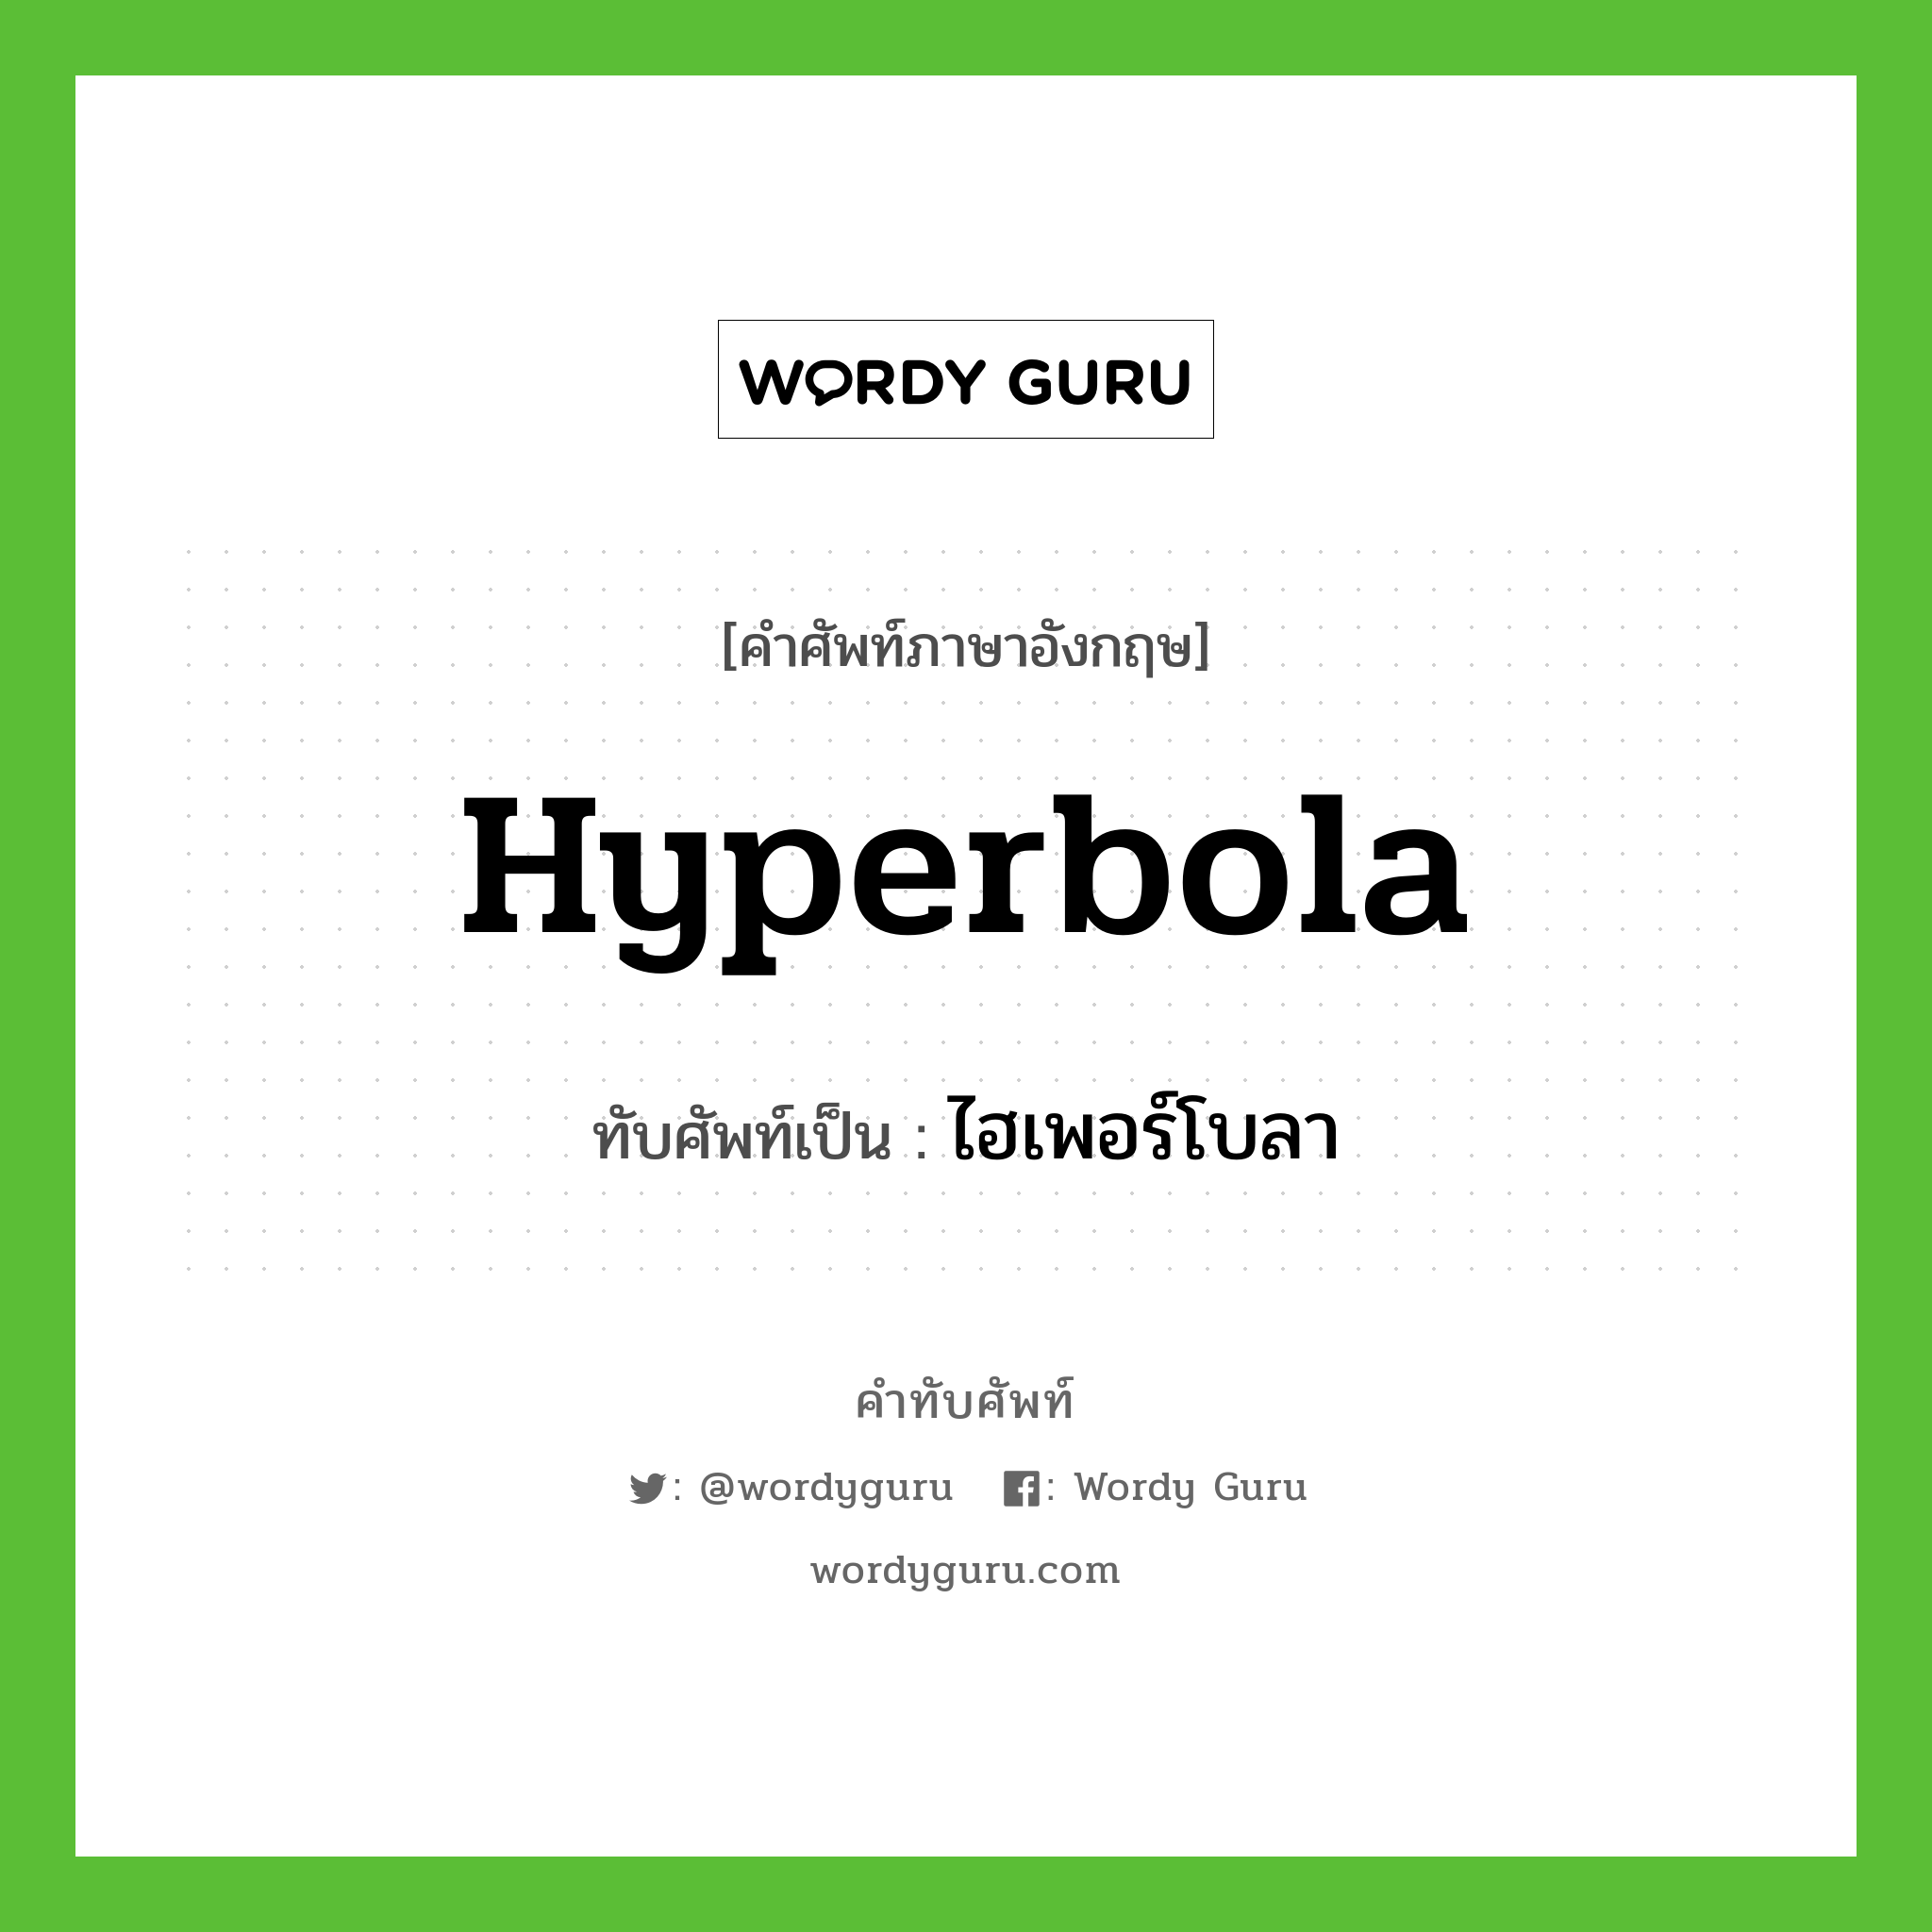 hyperbola เขียนเป็นคำไทยว่าอะไร?, คำศัพท์ภาษาอังกฤษ hyperbola ทับศัพท์เป็น ไฮเพอร์โบลา